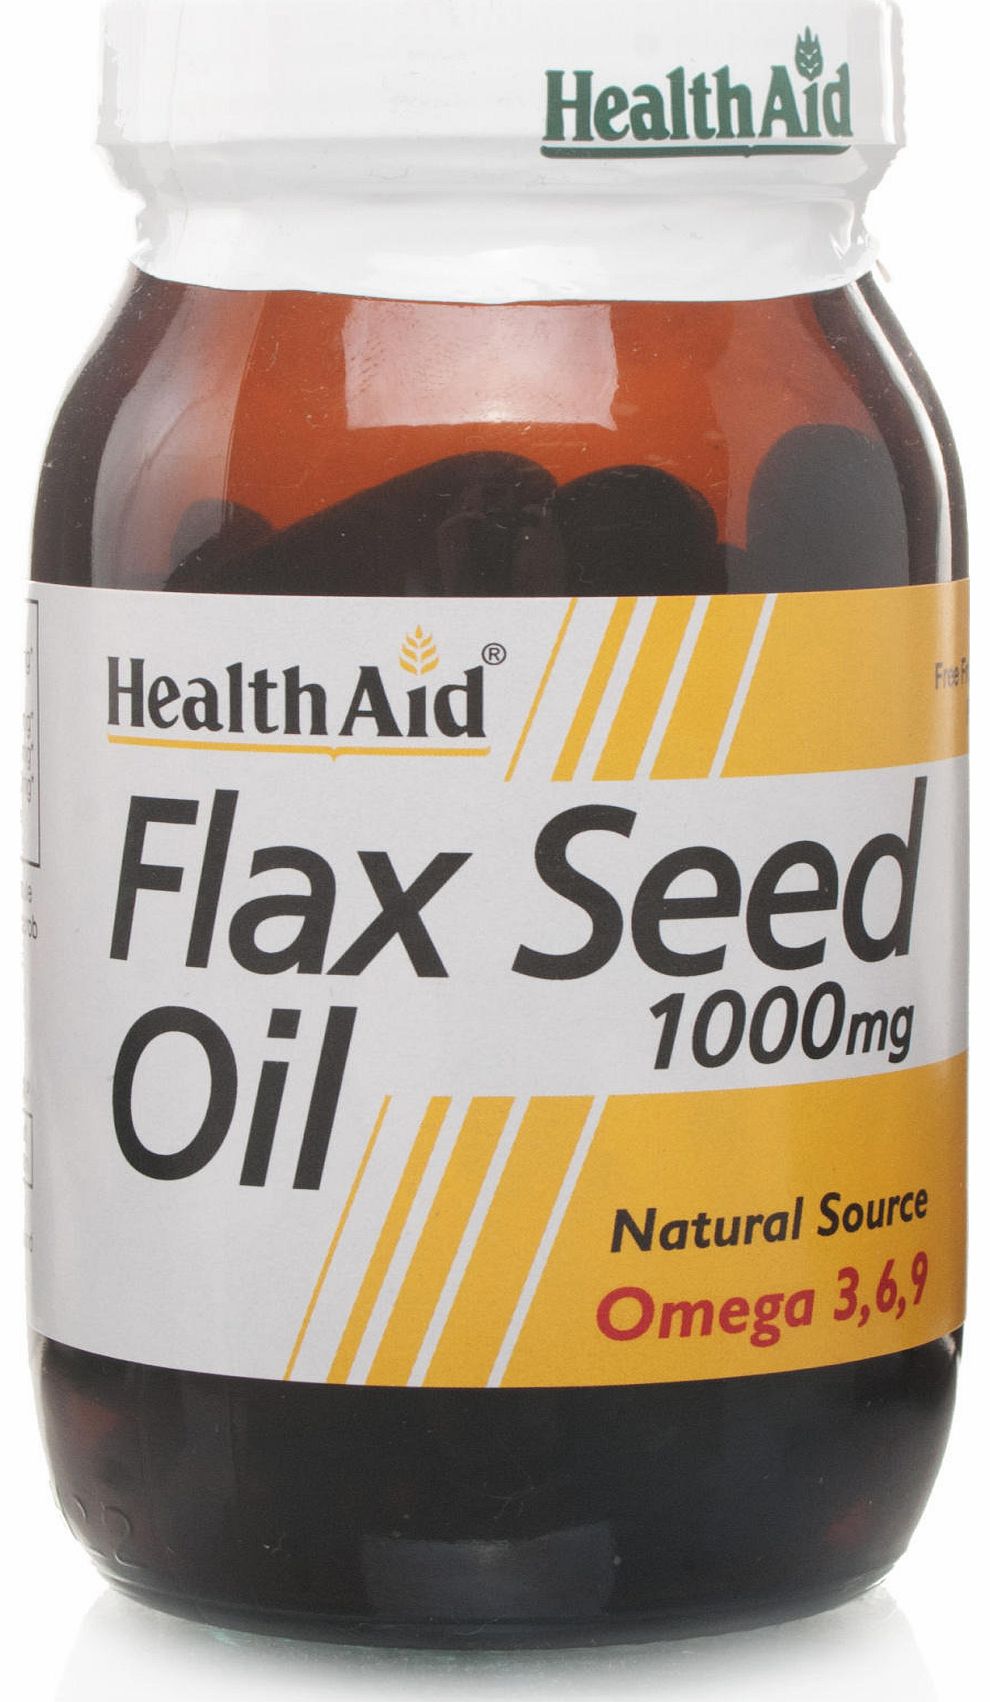 Flaxseed Oil 1000mg Capsules